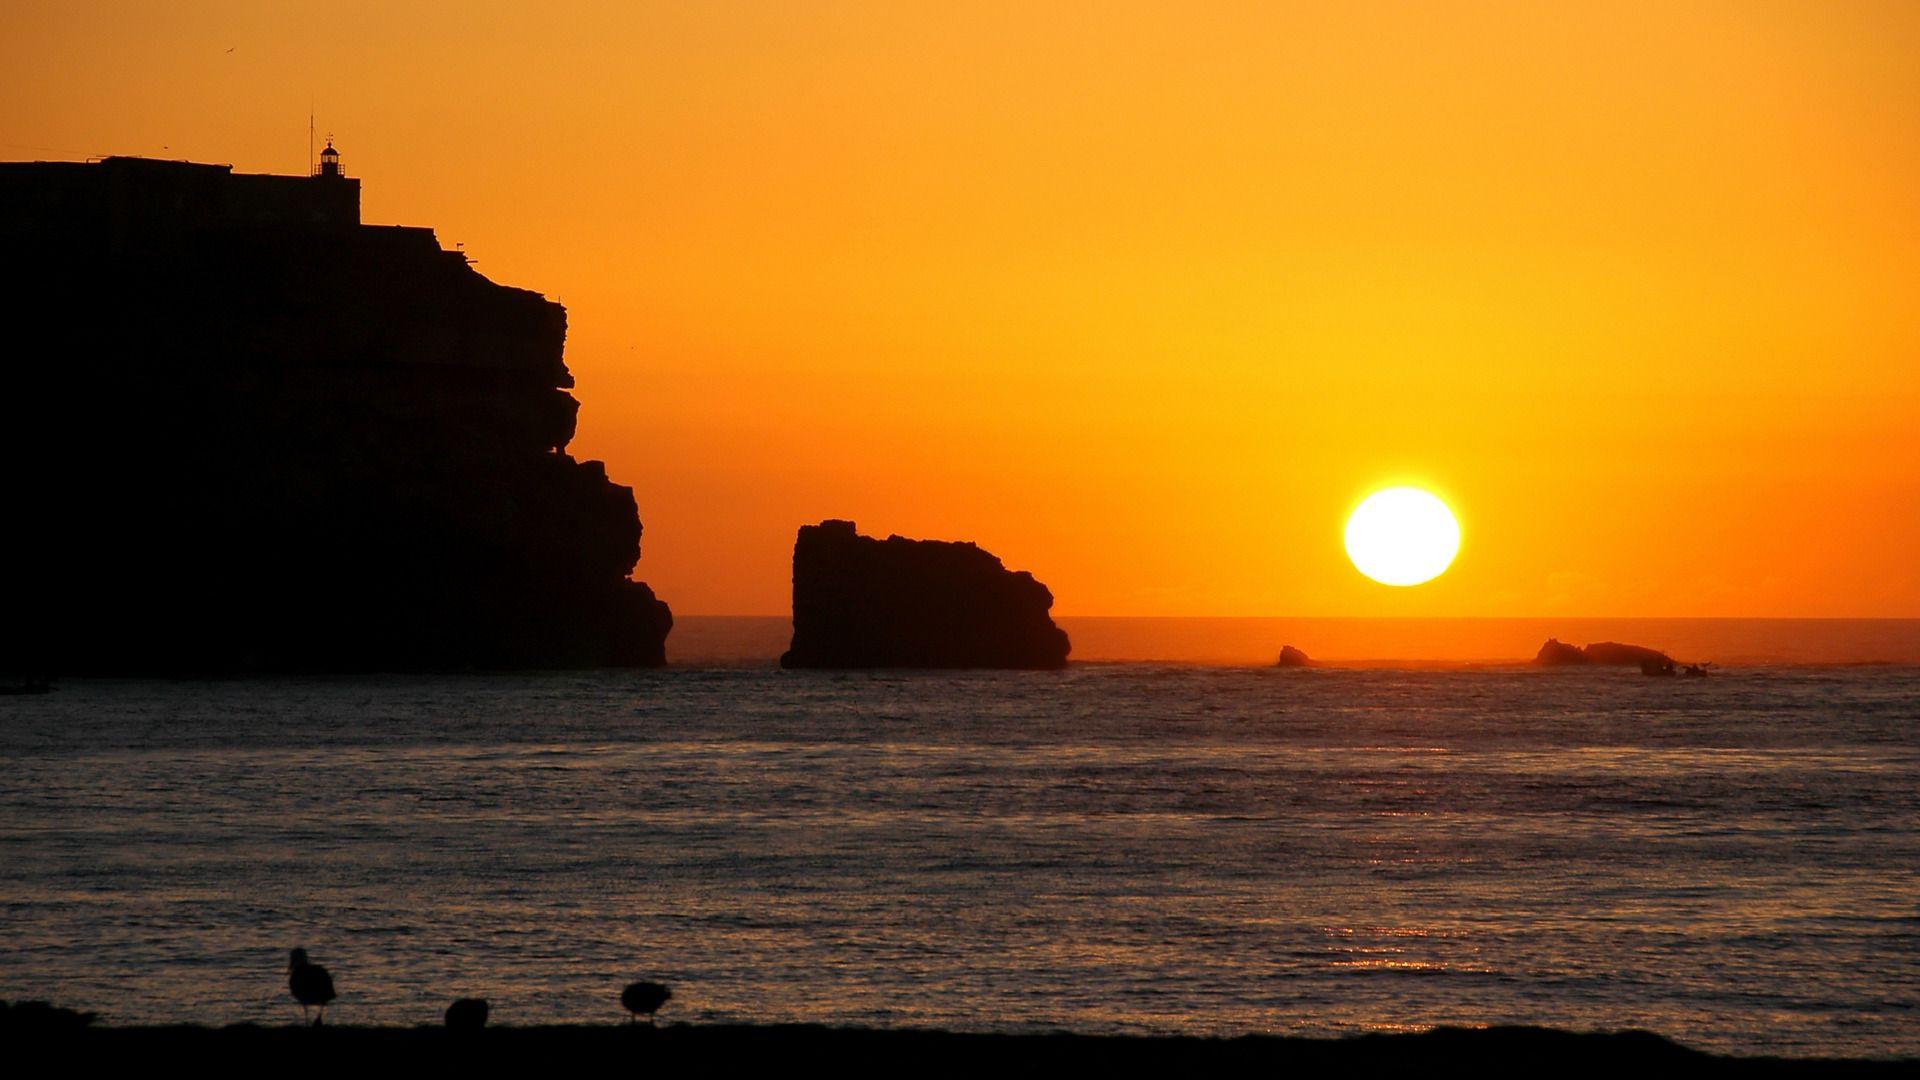 Sunrise on The Beach HD Beach Wallpaper 1080p. My wishlist